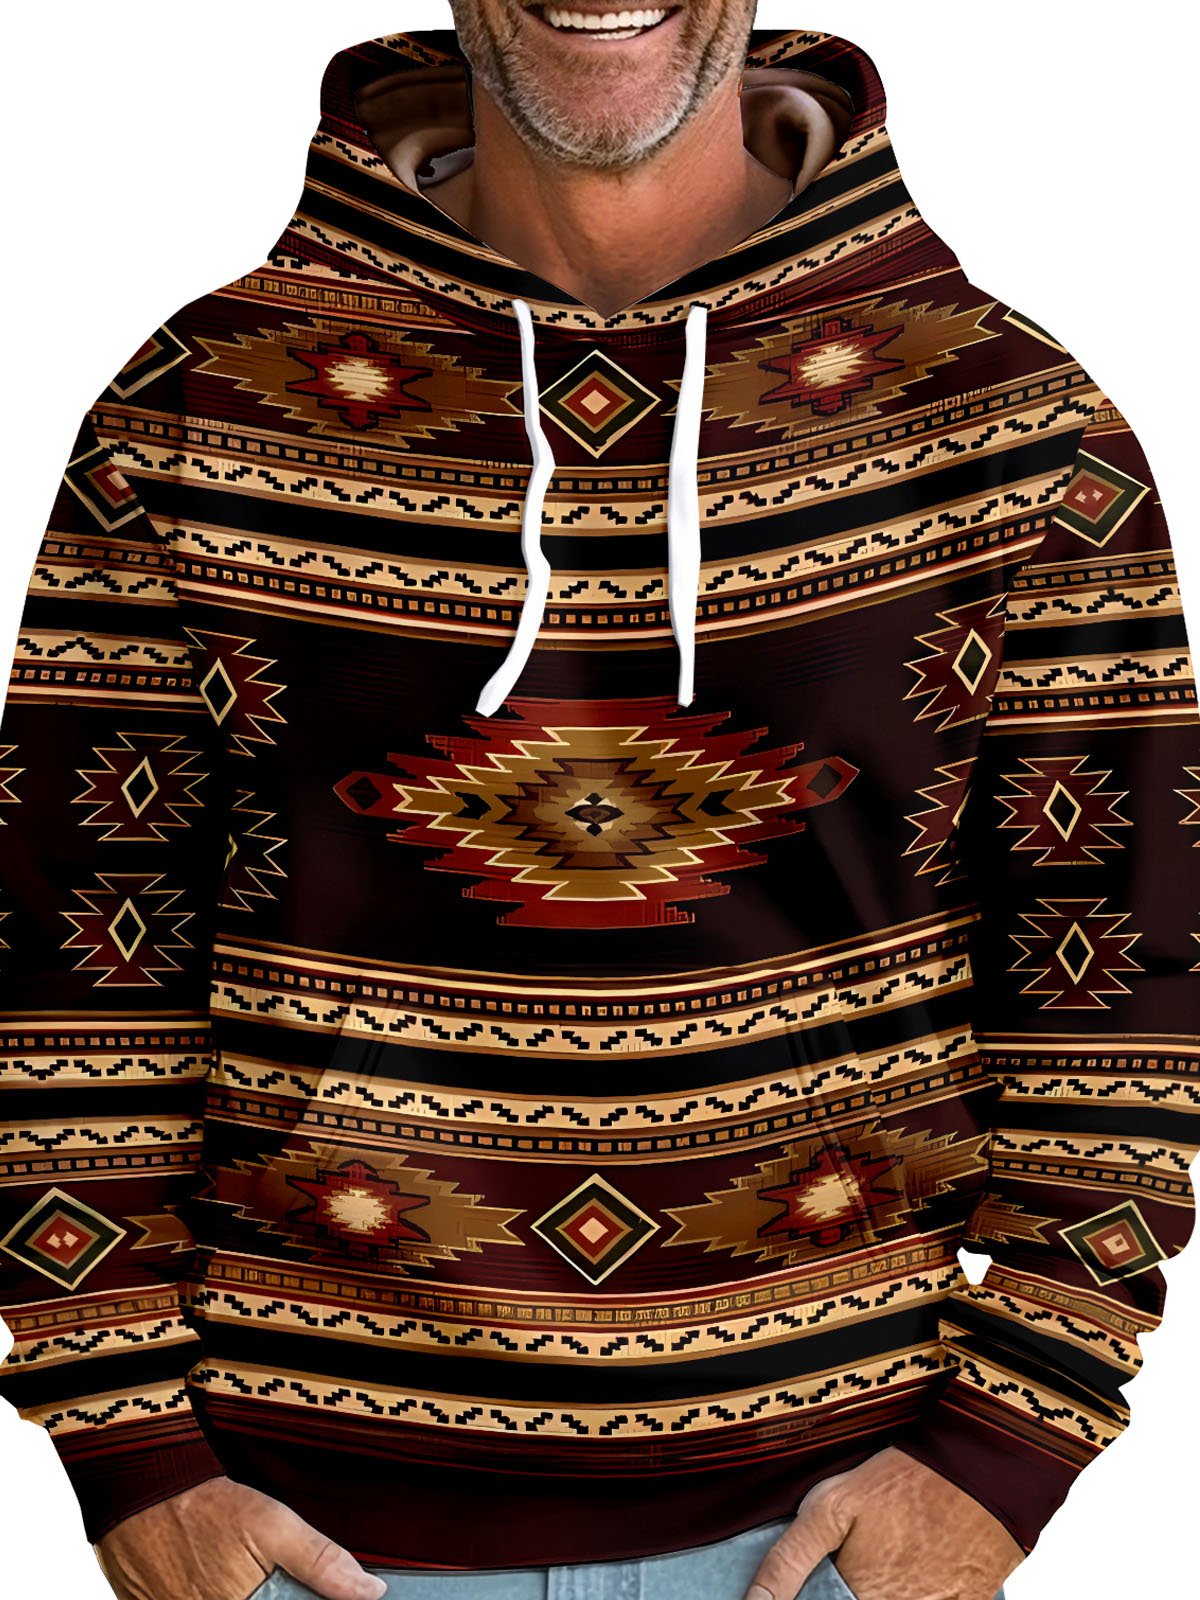 JoyMitty Vintage Aztec Geometric Brown Men's Drawstring Hoodies Stretch Plus Size Outdoor Camp Pocket Pullover Sweatshirts